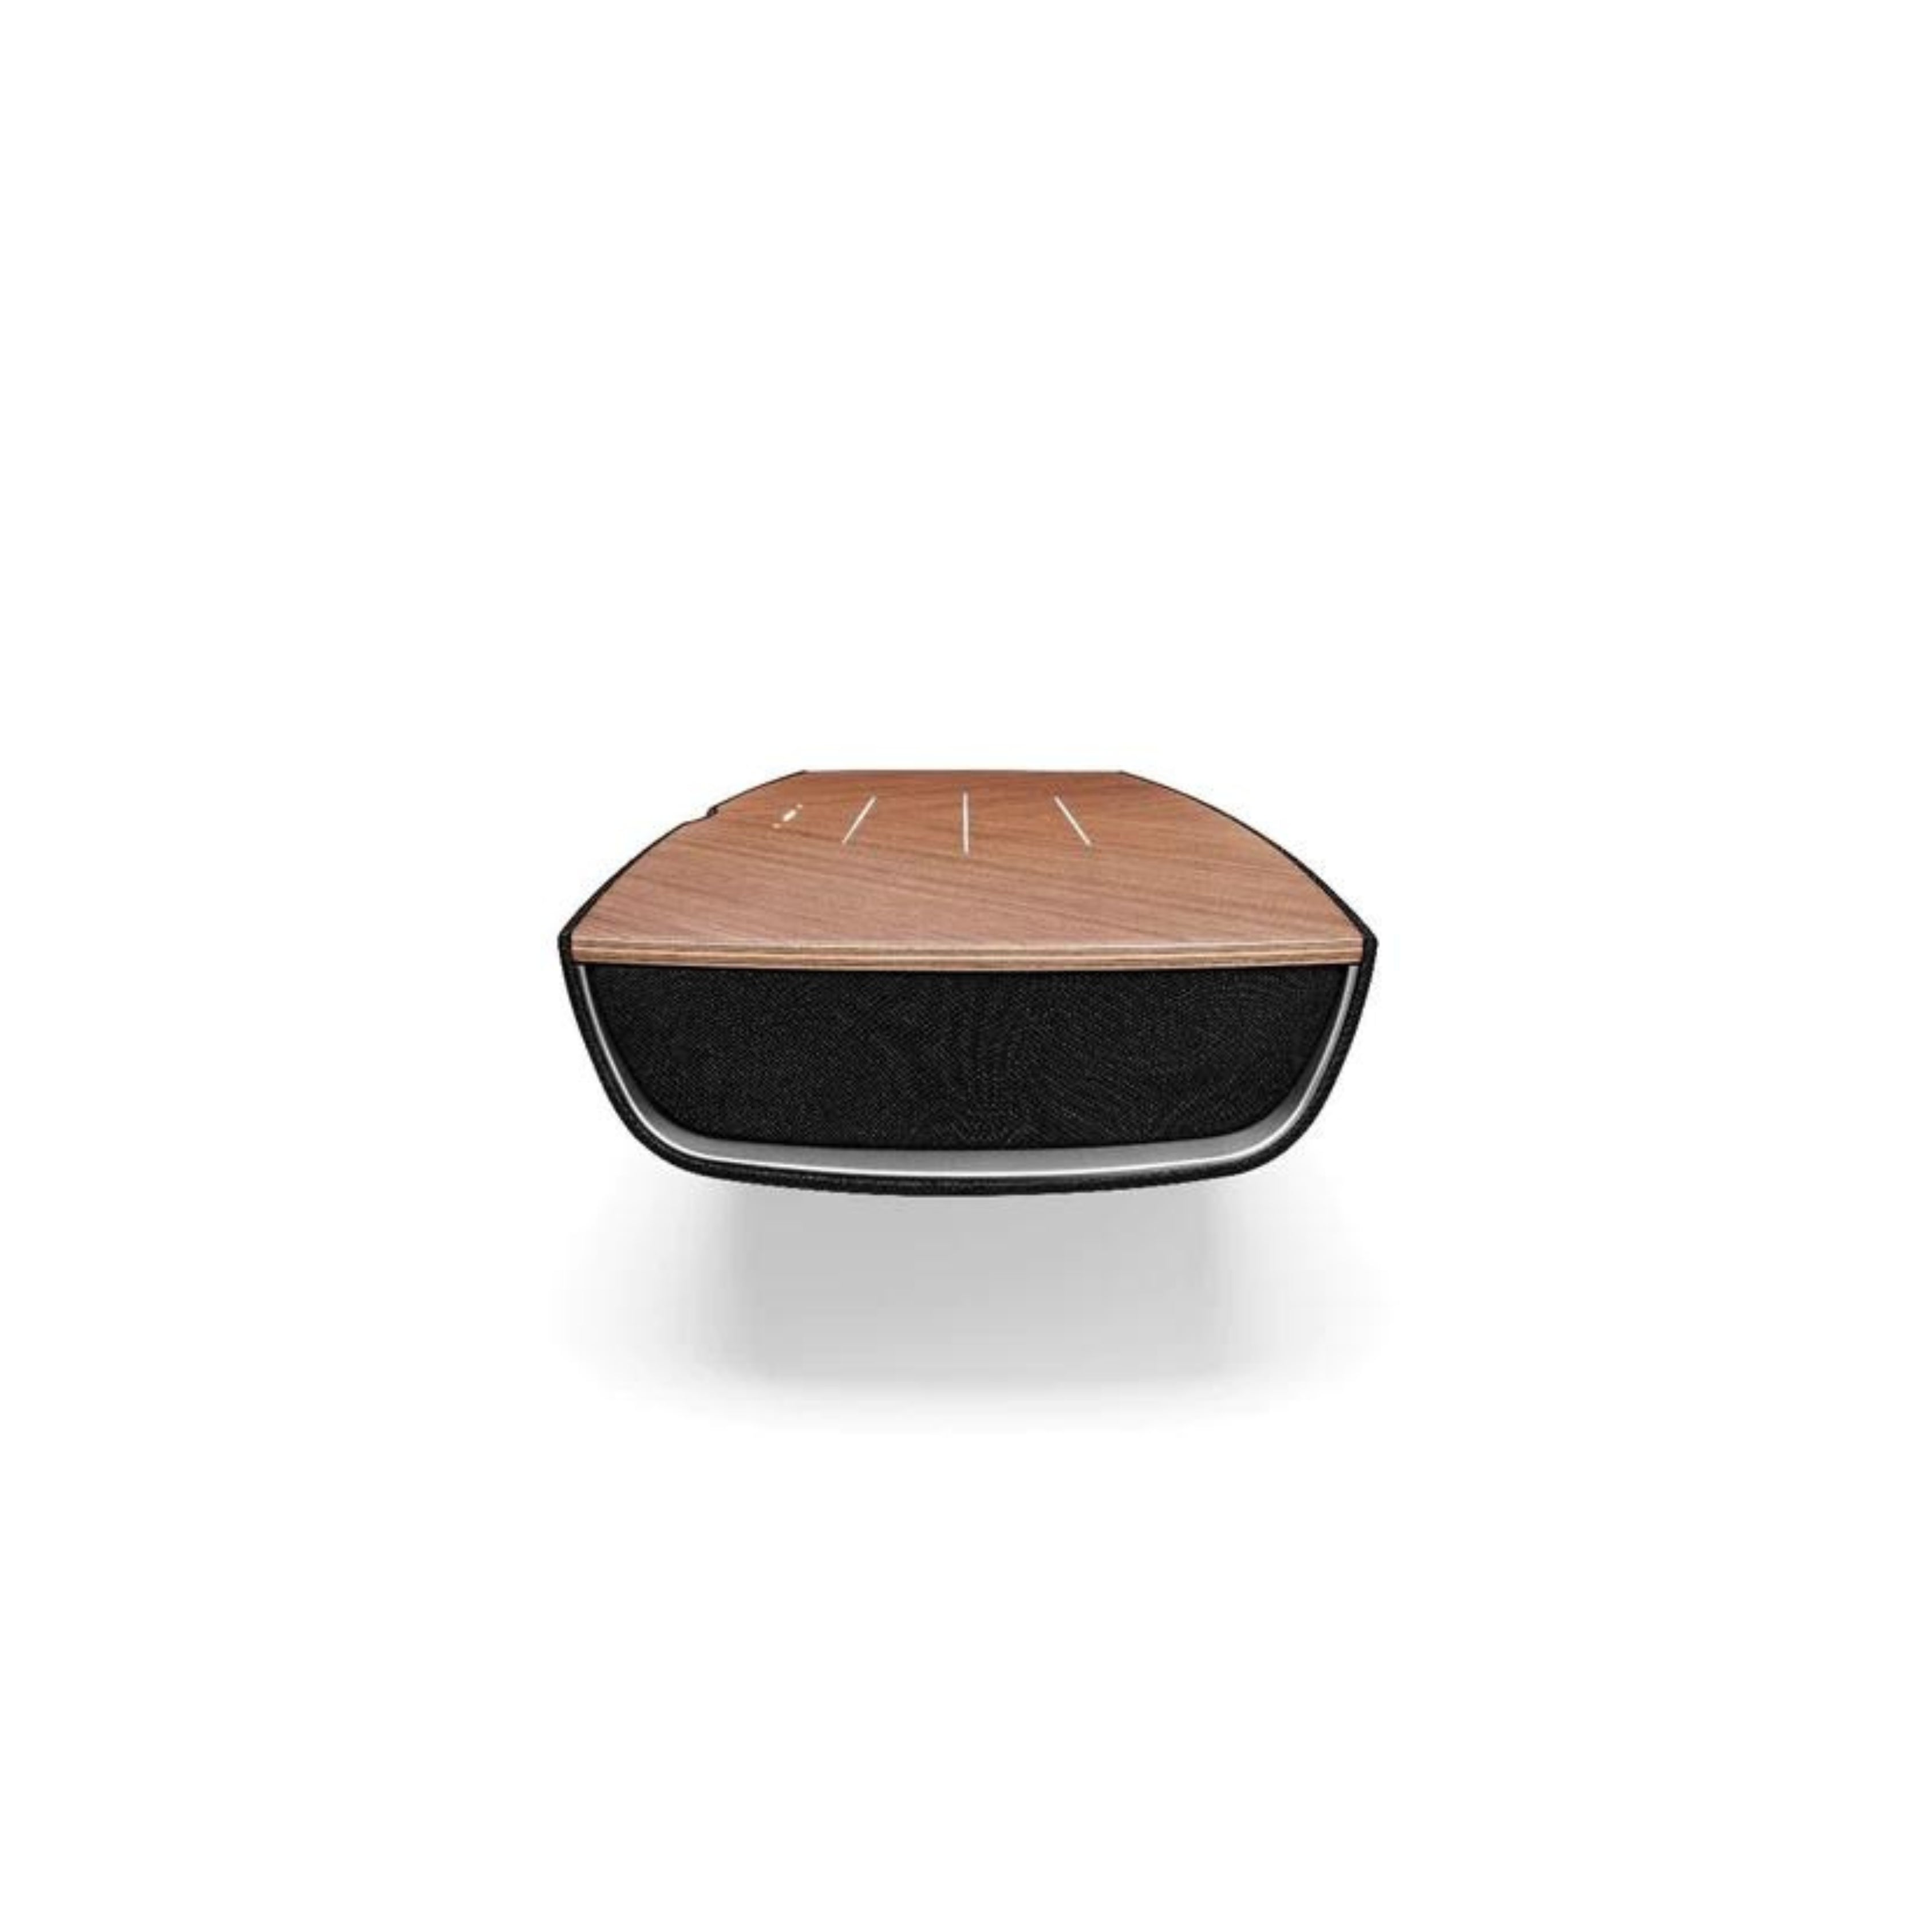 Sonus Faber Omnia - The New All-In-One Wireless Speaker